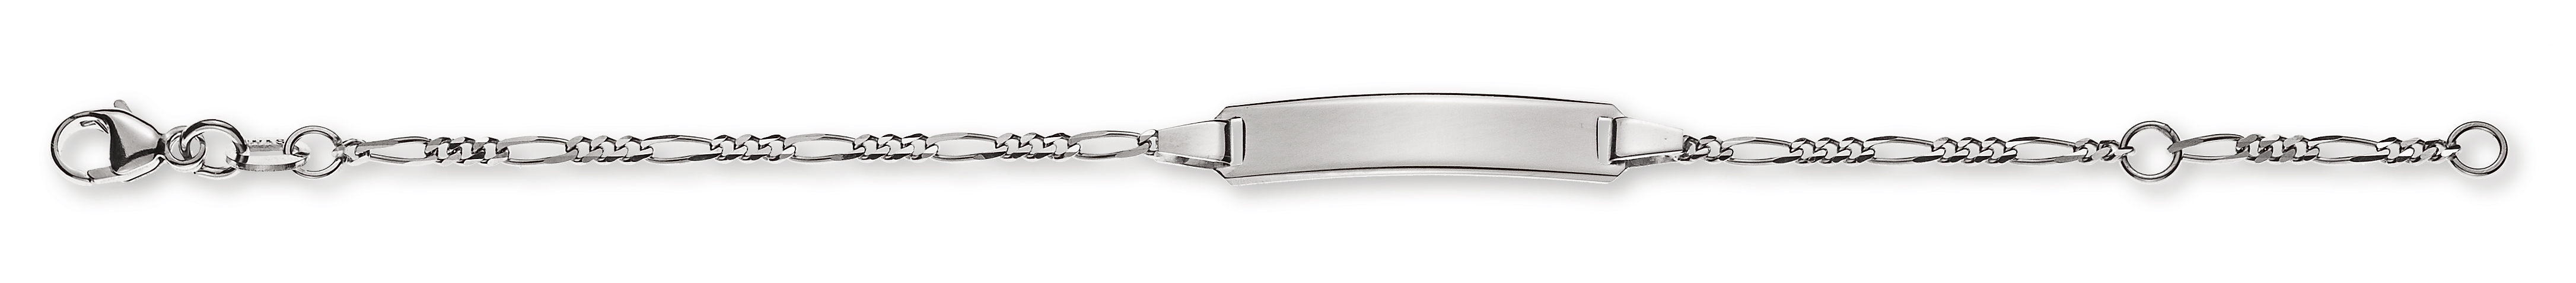 AURONOS Élégance ID-Bracelet en or blanc 14k Chaîne Figaro 16cm